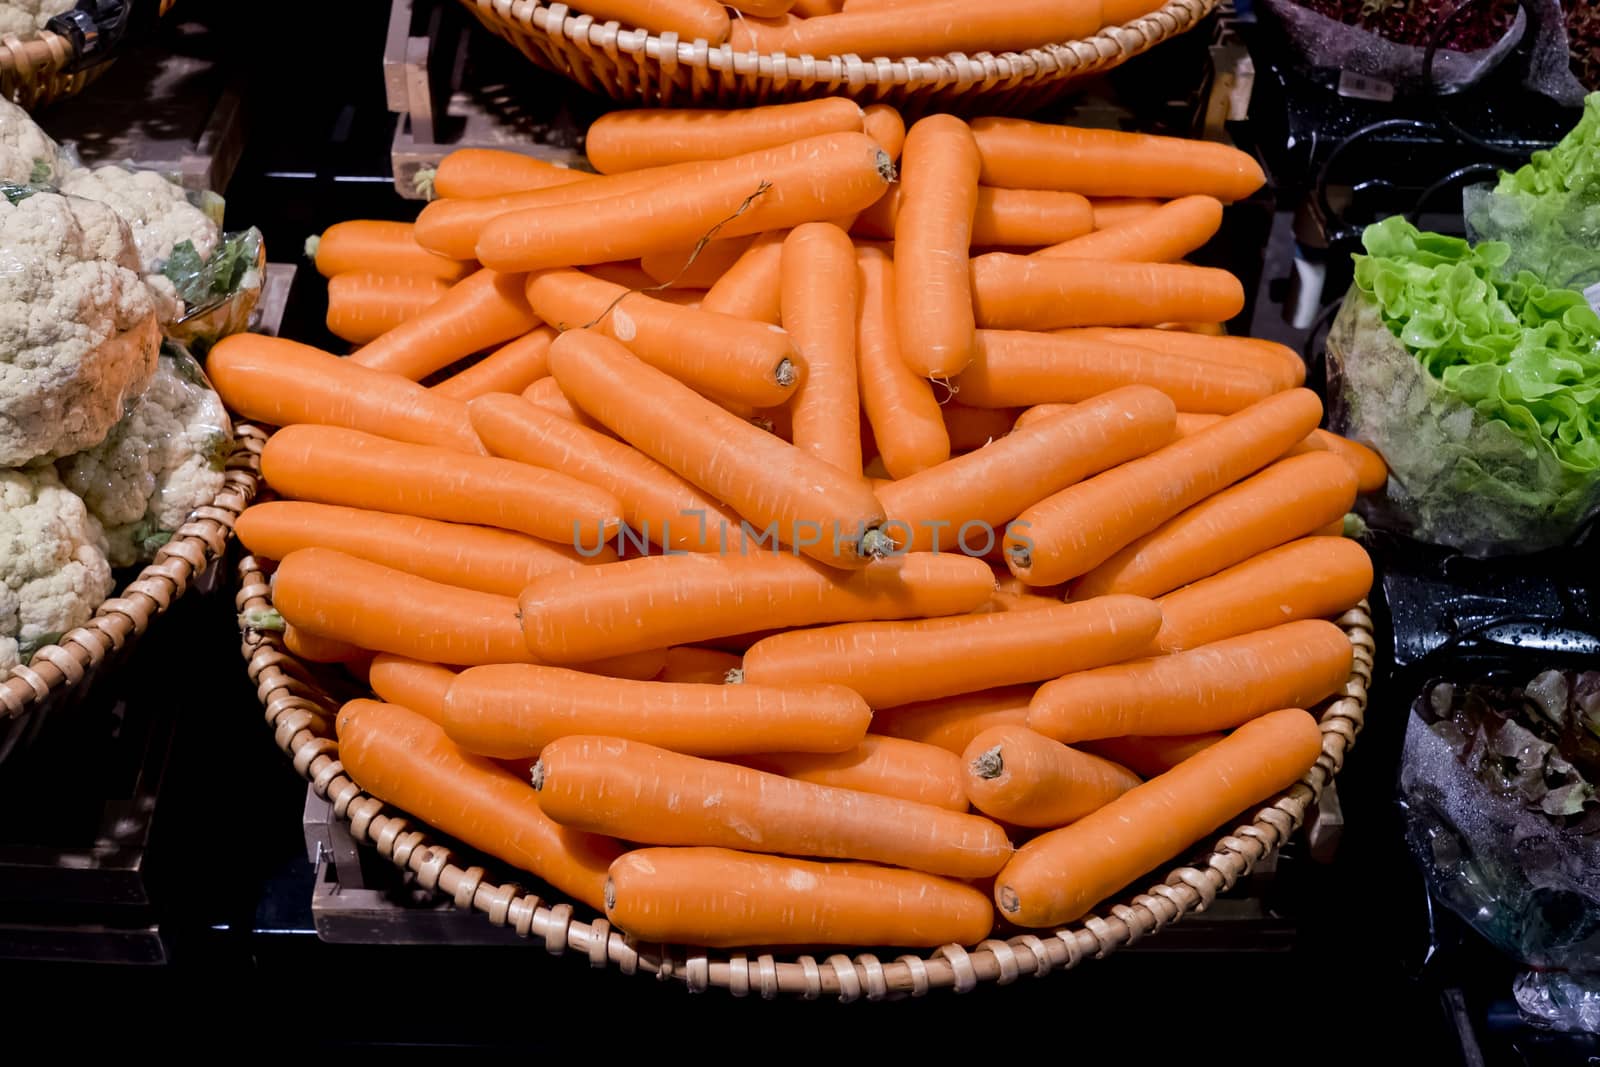 Carrot vegetable in supermarket by art9858